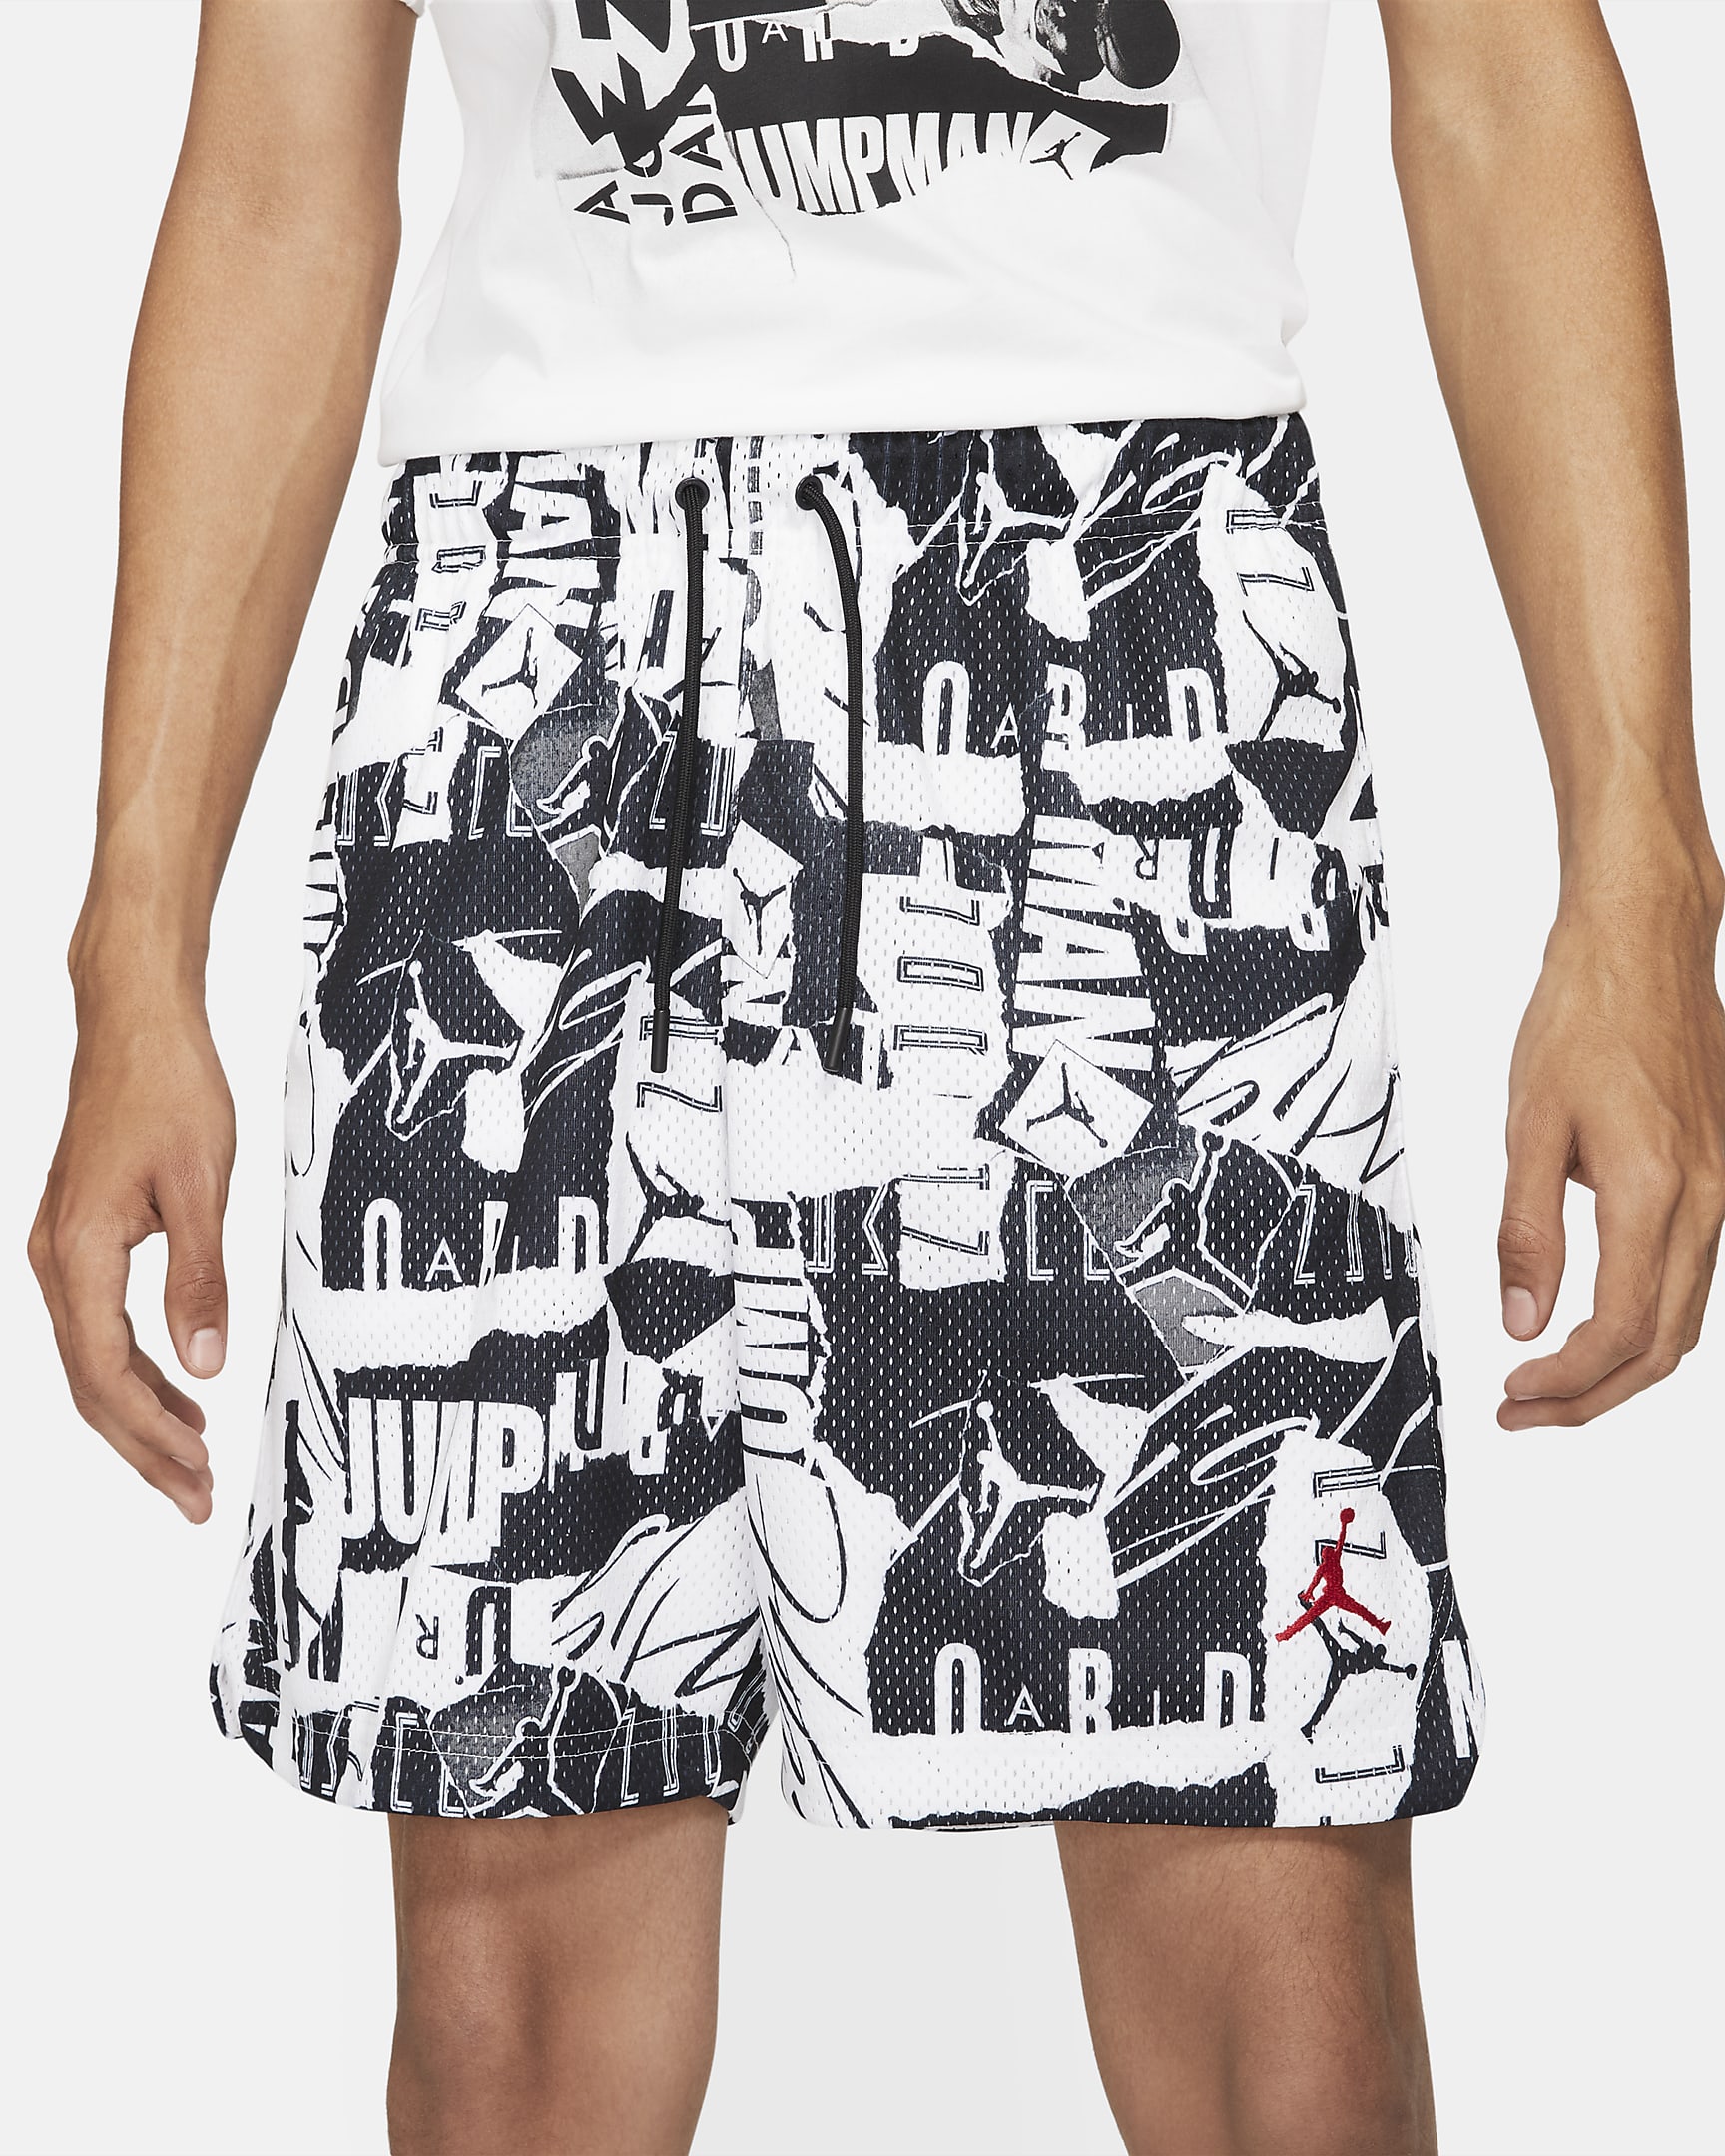 jordan-essentials-mens-printed-mesh-shorts-cMXF76-1.png